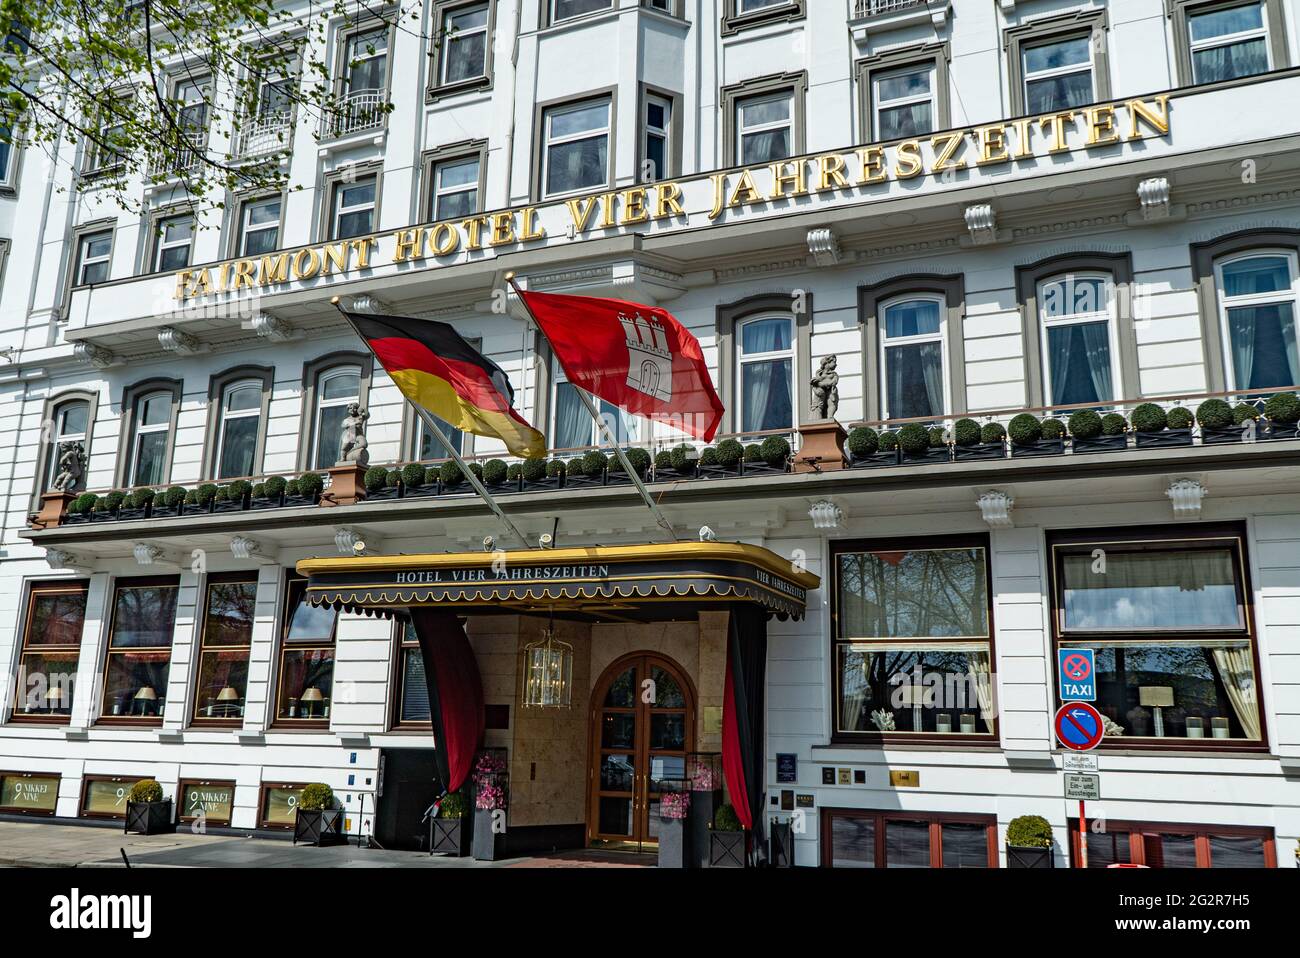 Famous Hotel Four Seasons Hotel in Hamburg called Vier Jahreszeiten - CITY  OF HAMBURG, GERMANY - MAY 10, 2021 Stock Photo - Alamy